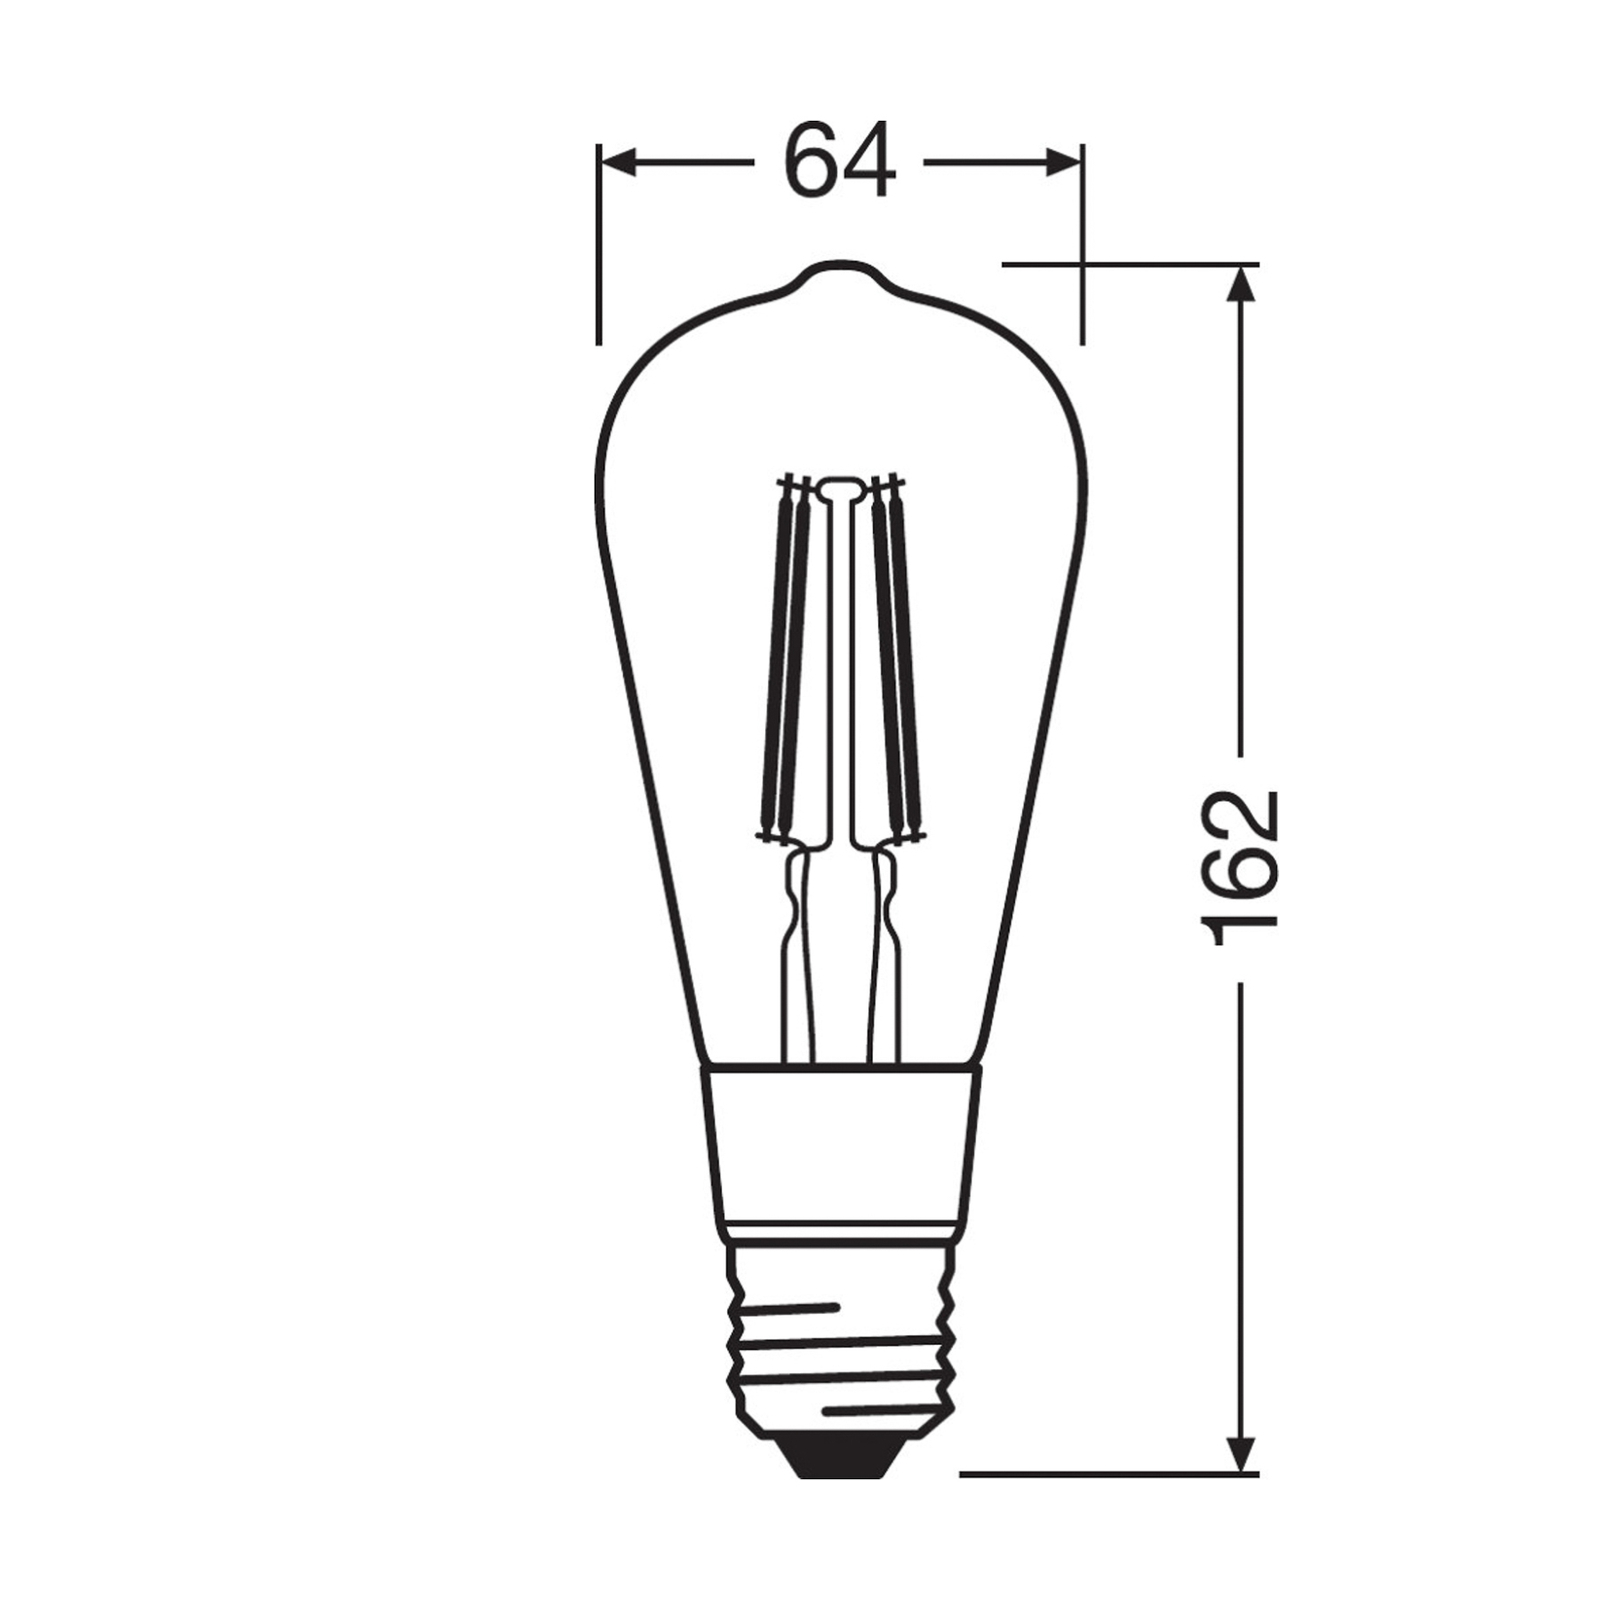 LEDVANCE SMART+ ZigBee filament Edison E27 6W 824